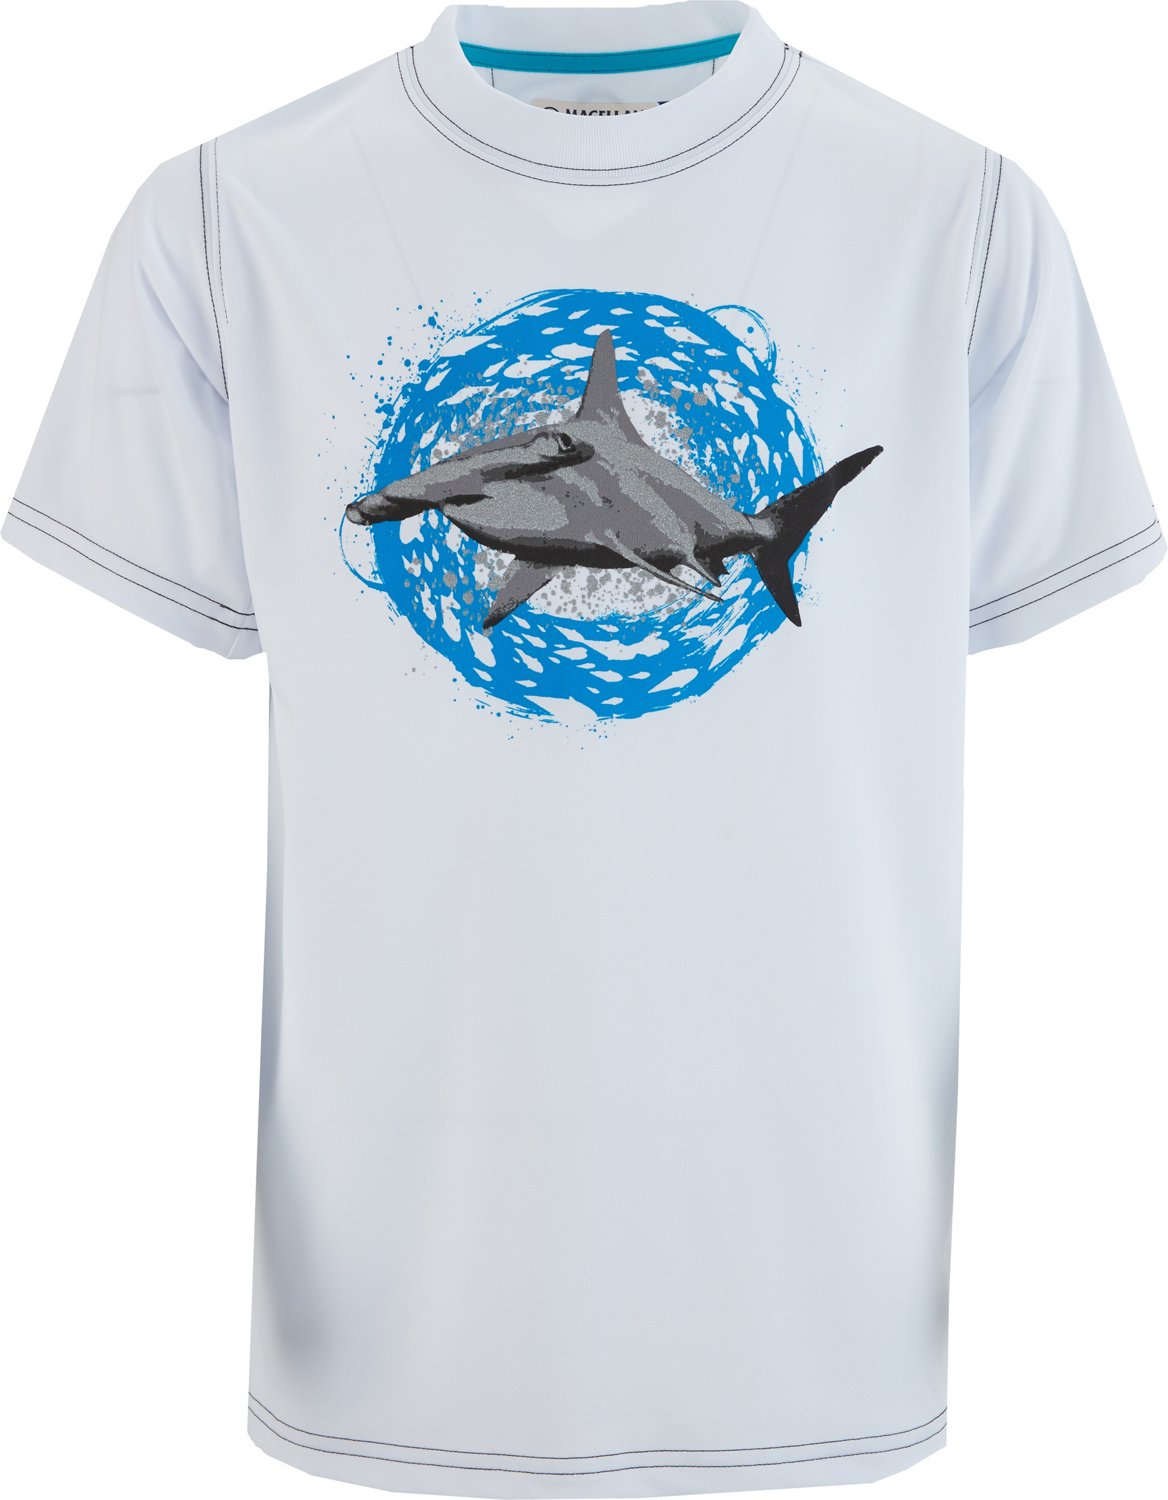 Fishing Graphic Tees - Fishing Graphic T-Shirts | Academy